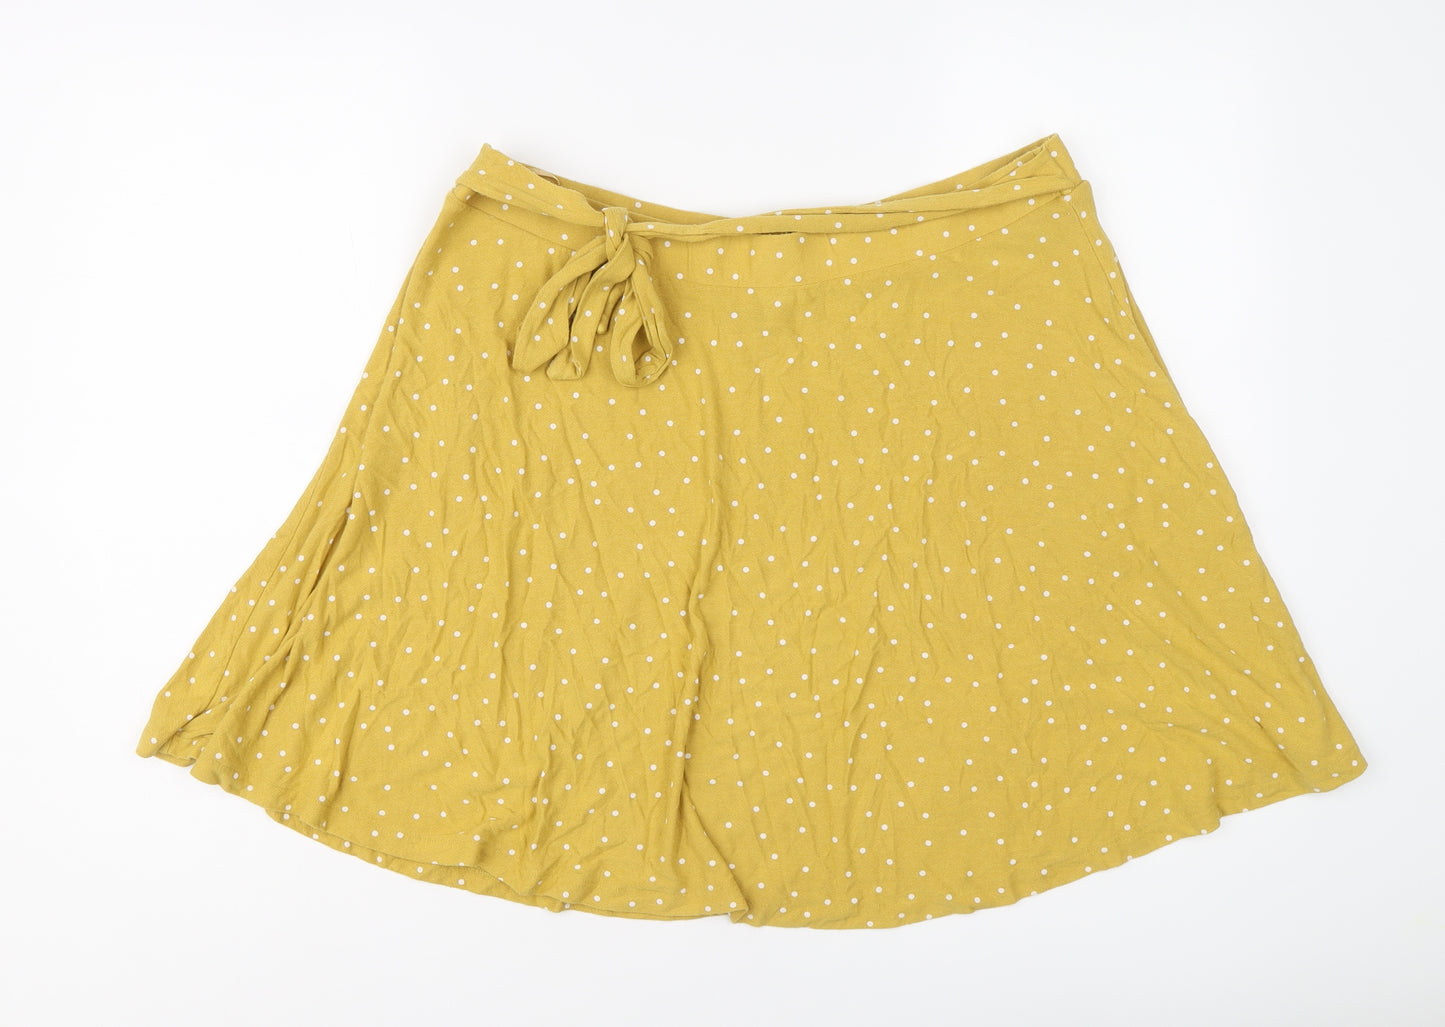 NEXT Womens Yellow Polka Dot Viscose Skater Skirt Size 20